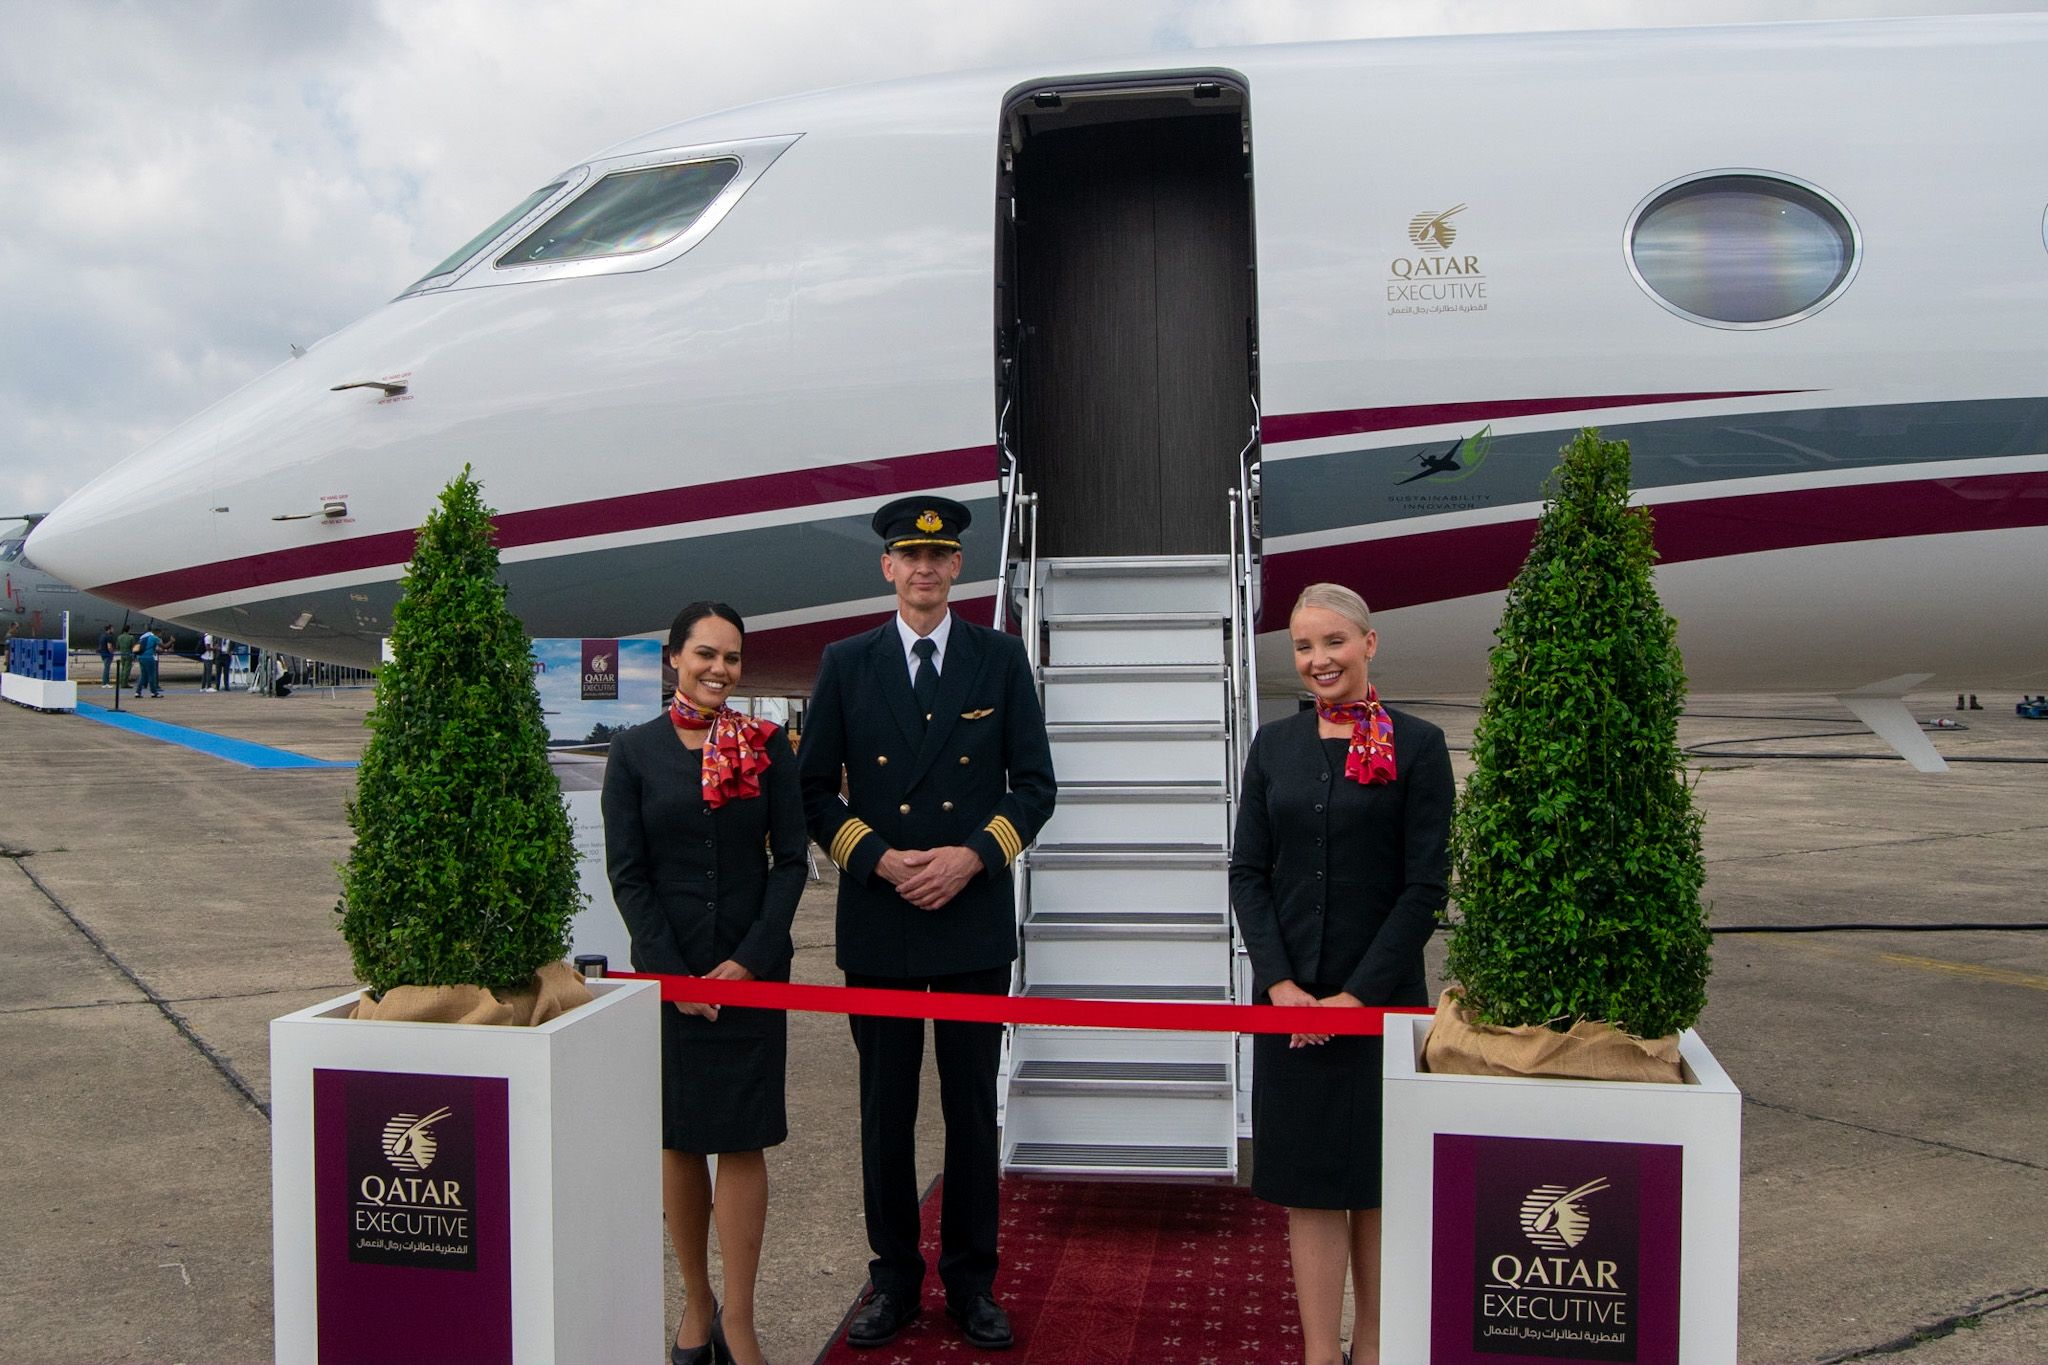 Qatar Executive's Gulfstream G700 grand reveal